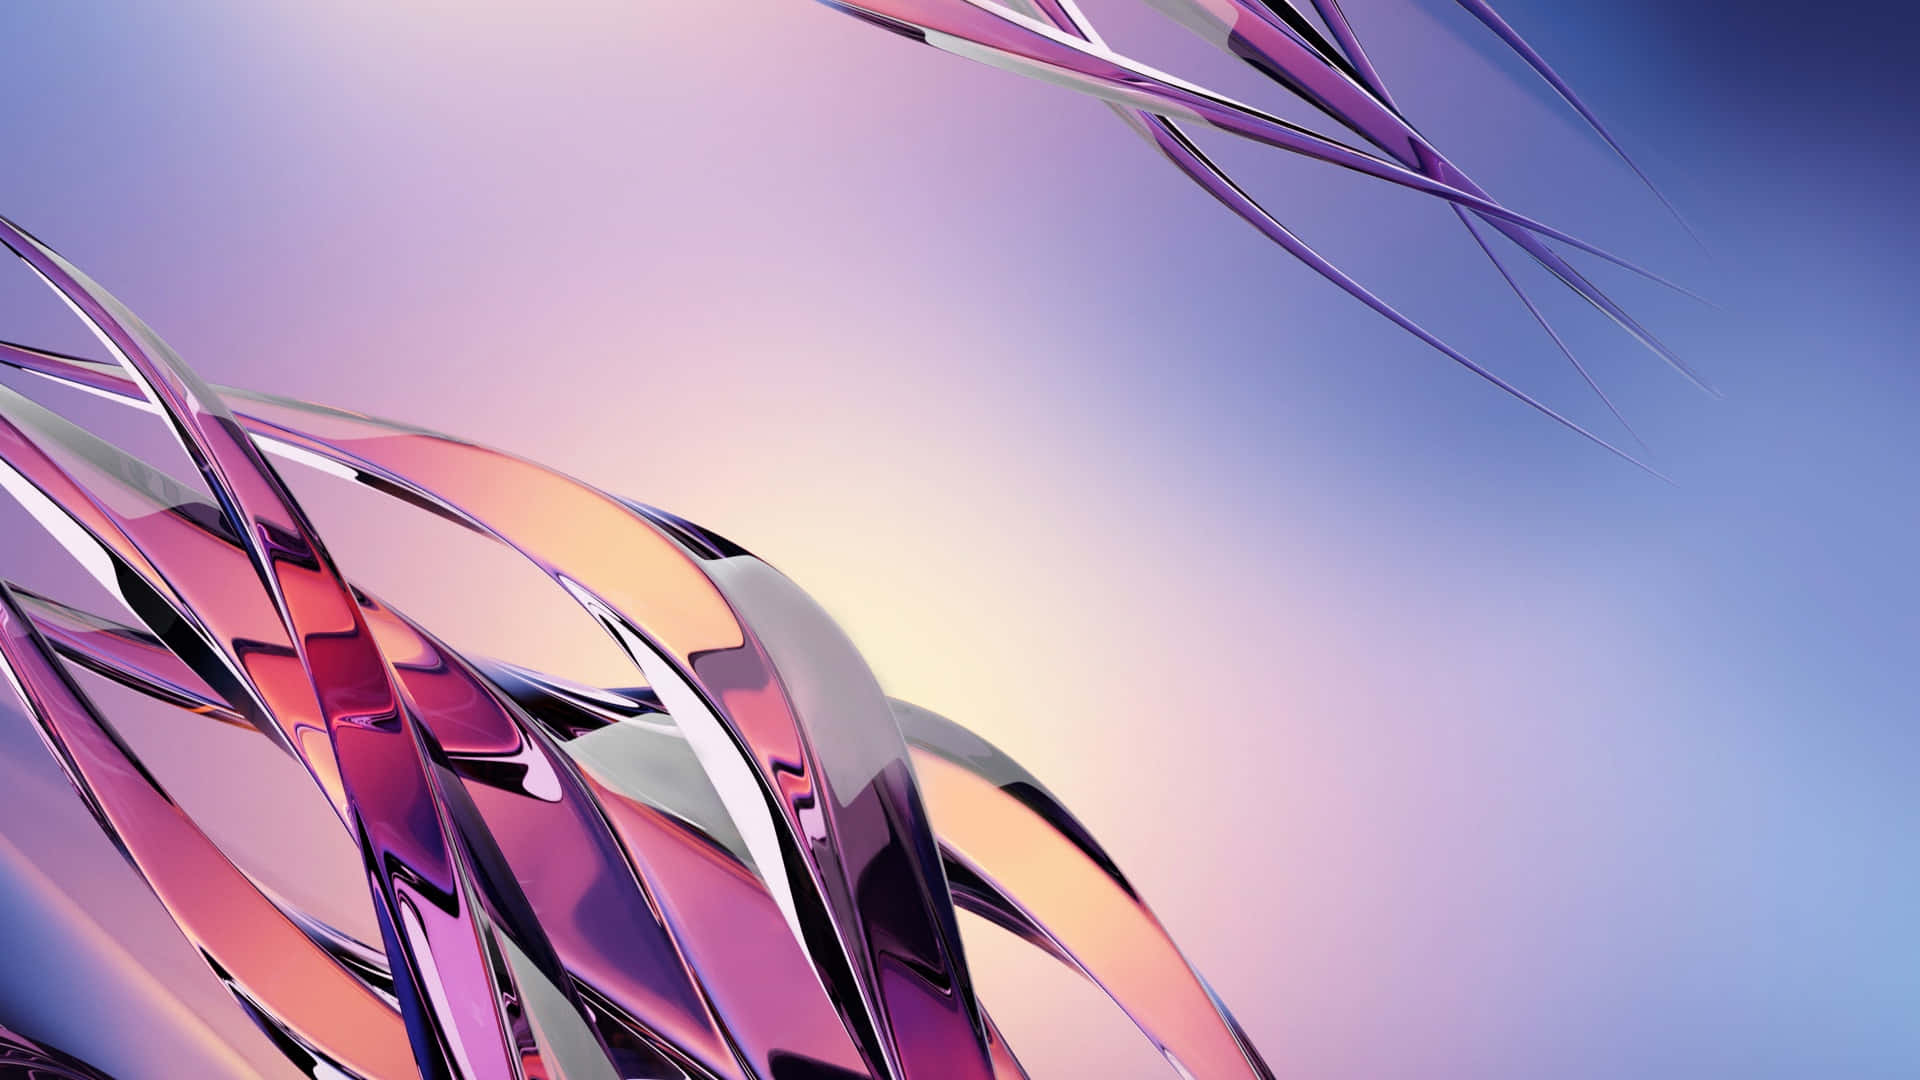 Abstract Pink Blue Chrome Design Wallpaper